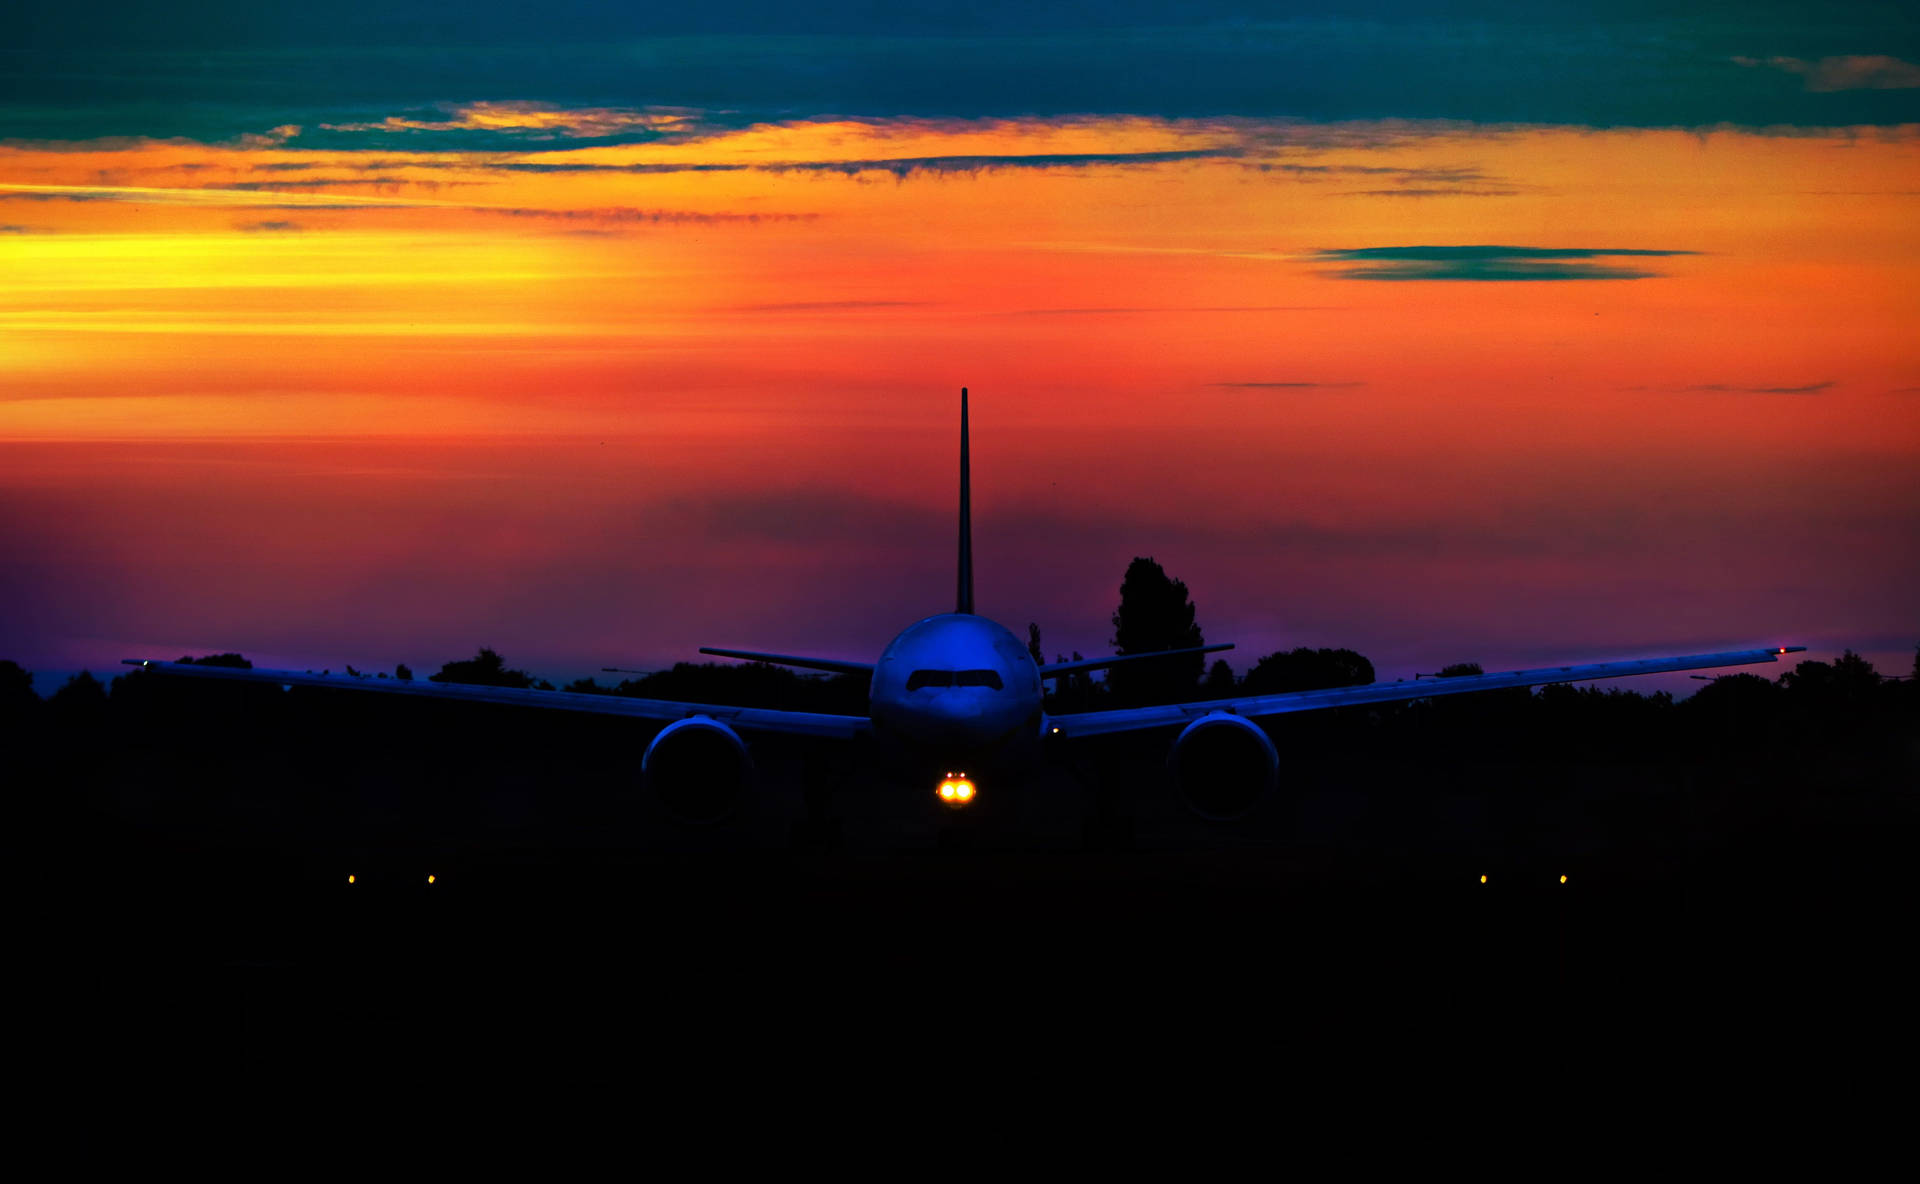 Beautiful Sunset Photo Of Airplane 4k Background